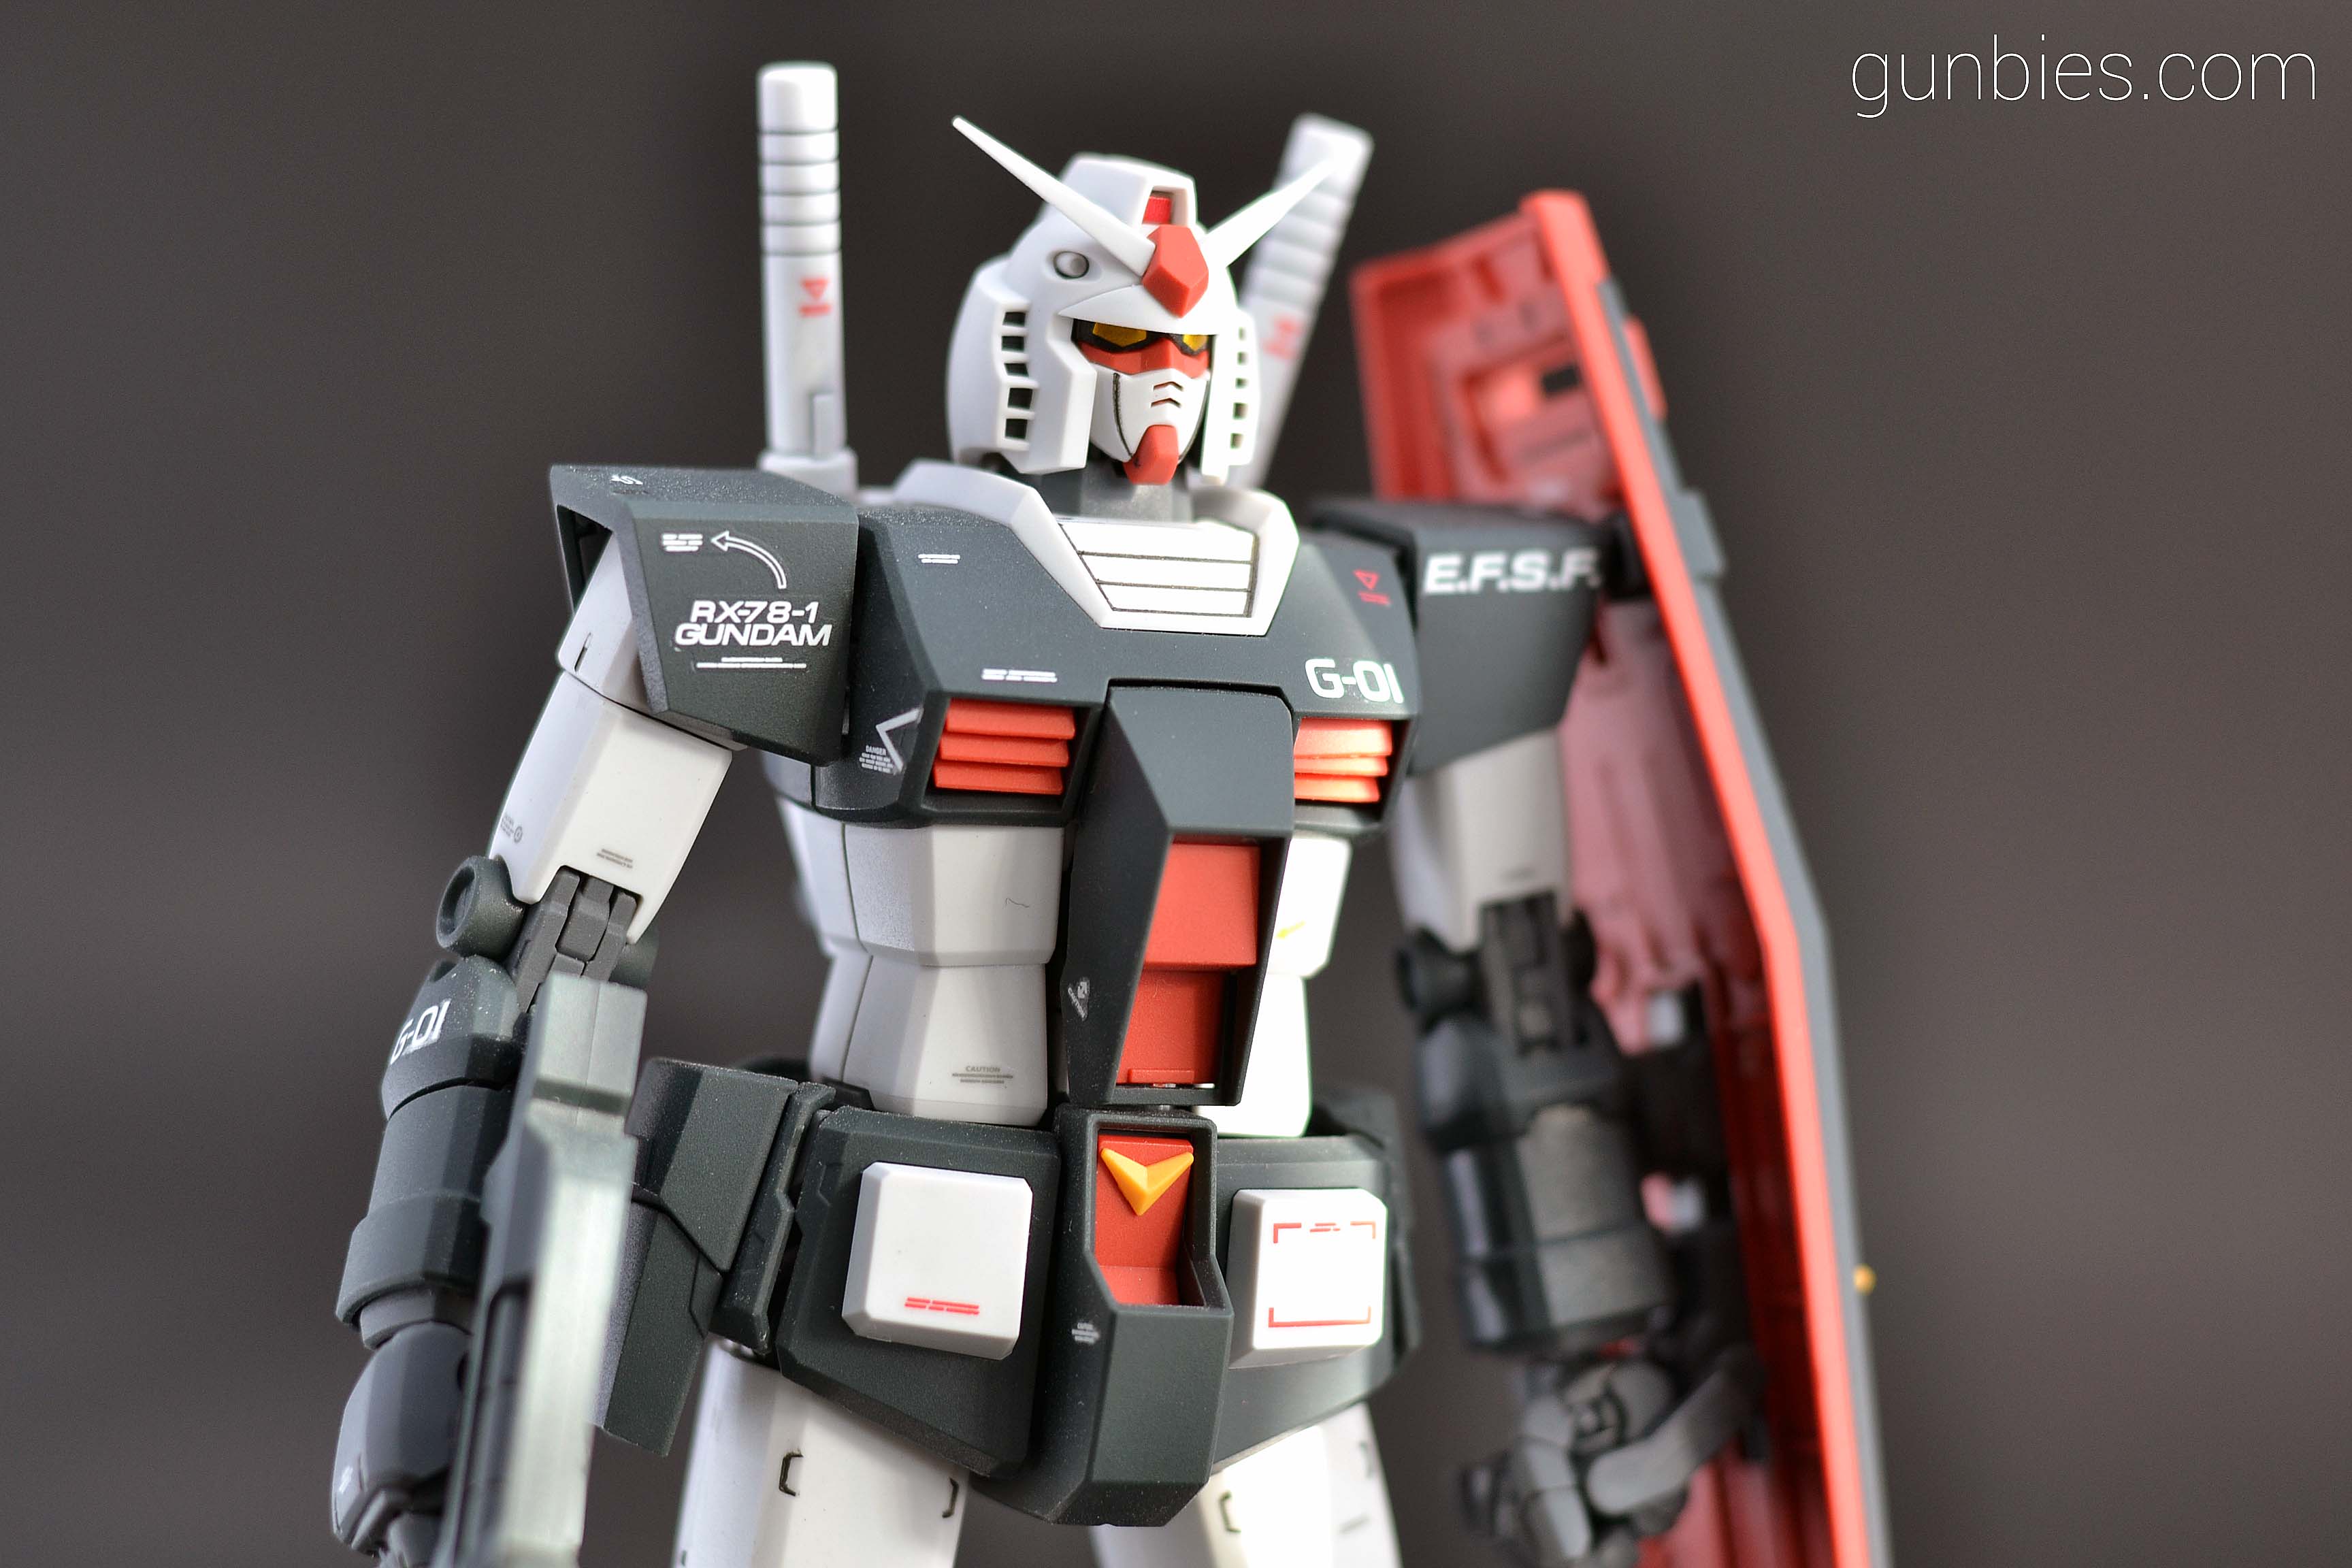 MG 1/100 RX-78-1 Prototype Gundam – Gunbies